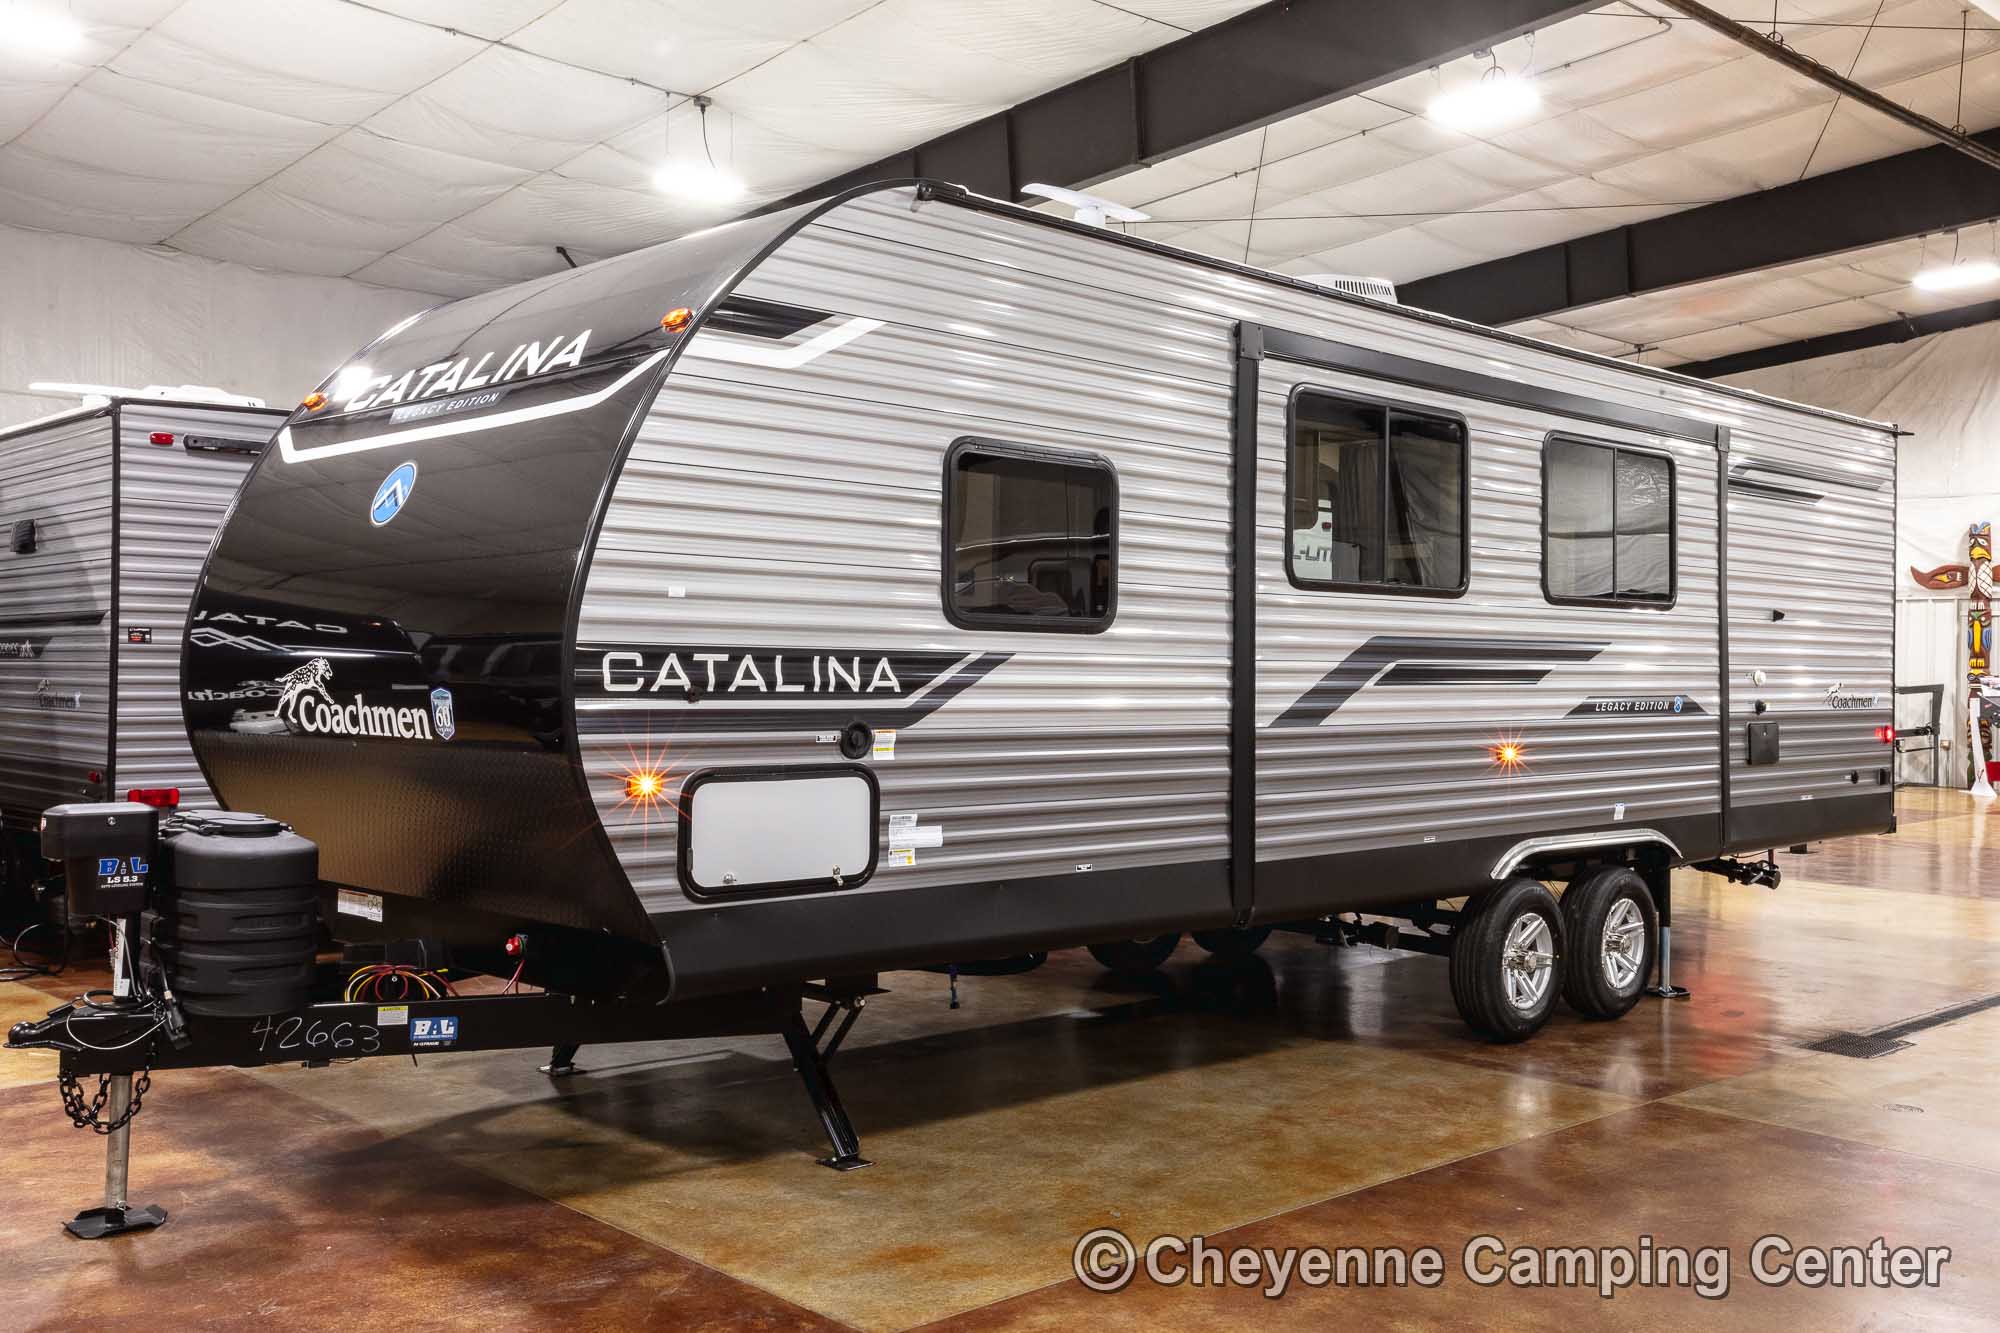 Inventory | Cheyenne Camping Center